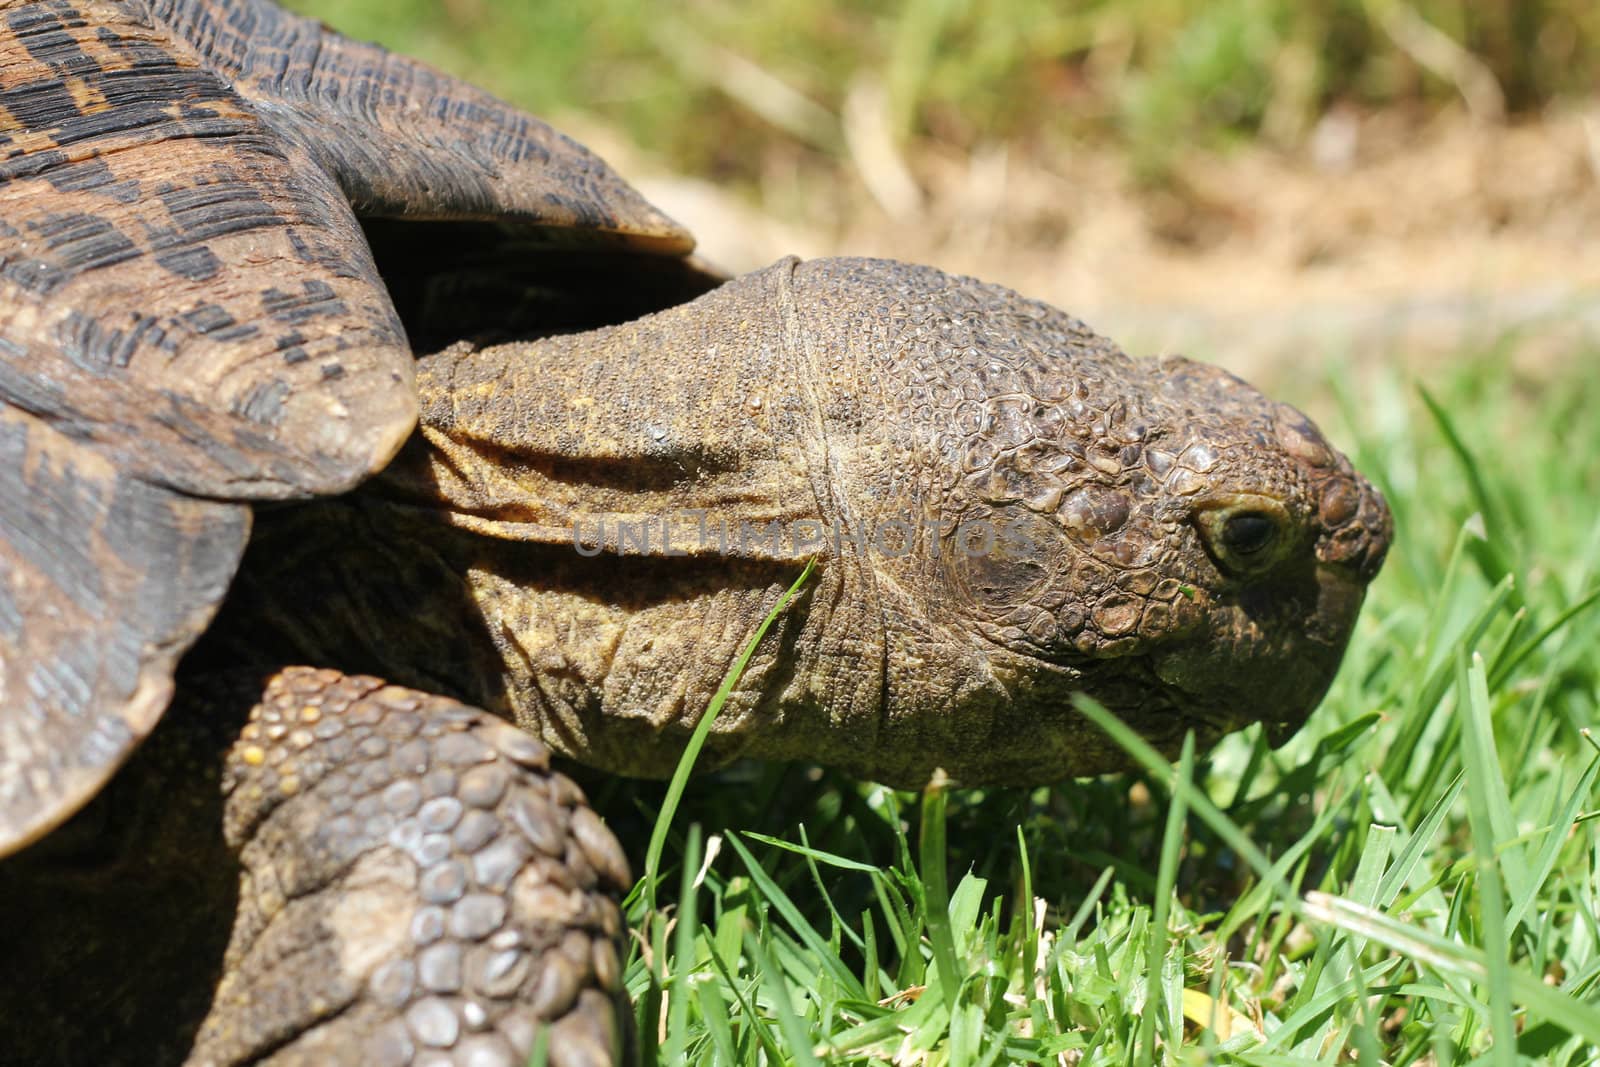 Turtle eating grass by dwaschnig_photo